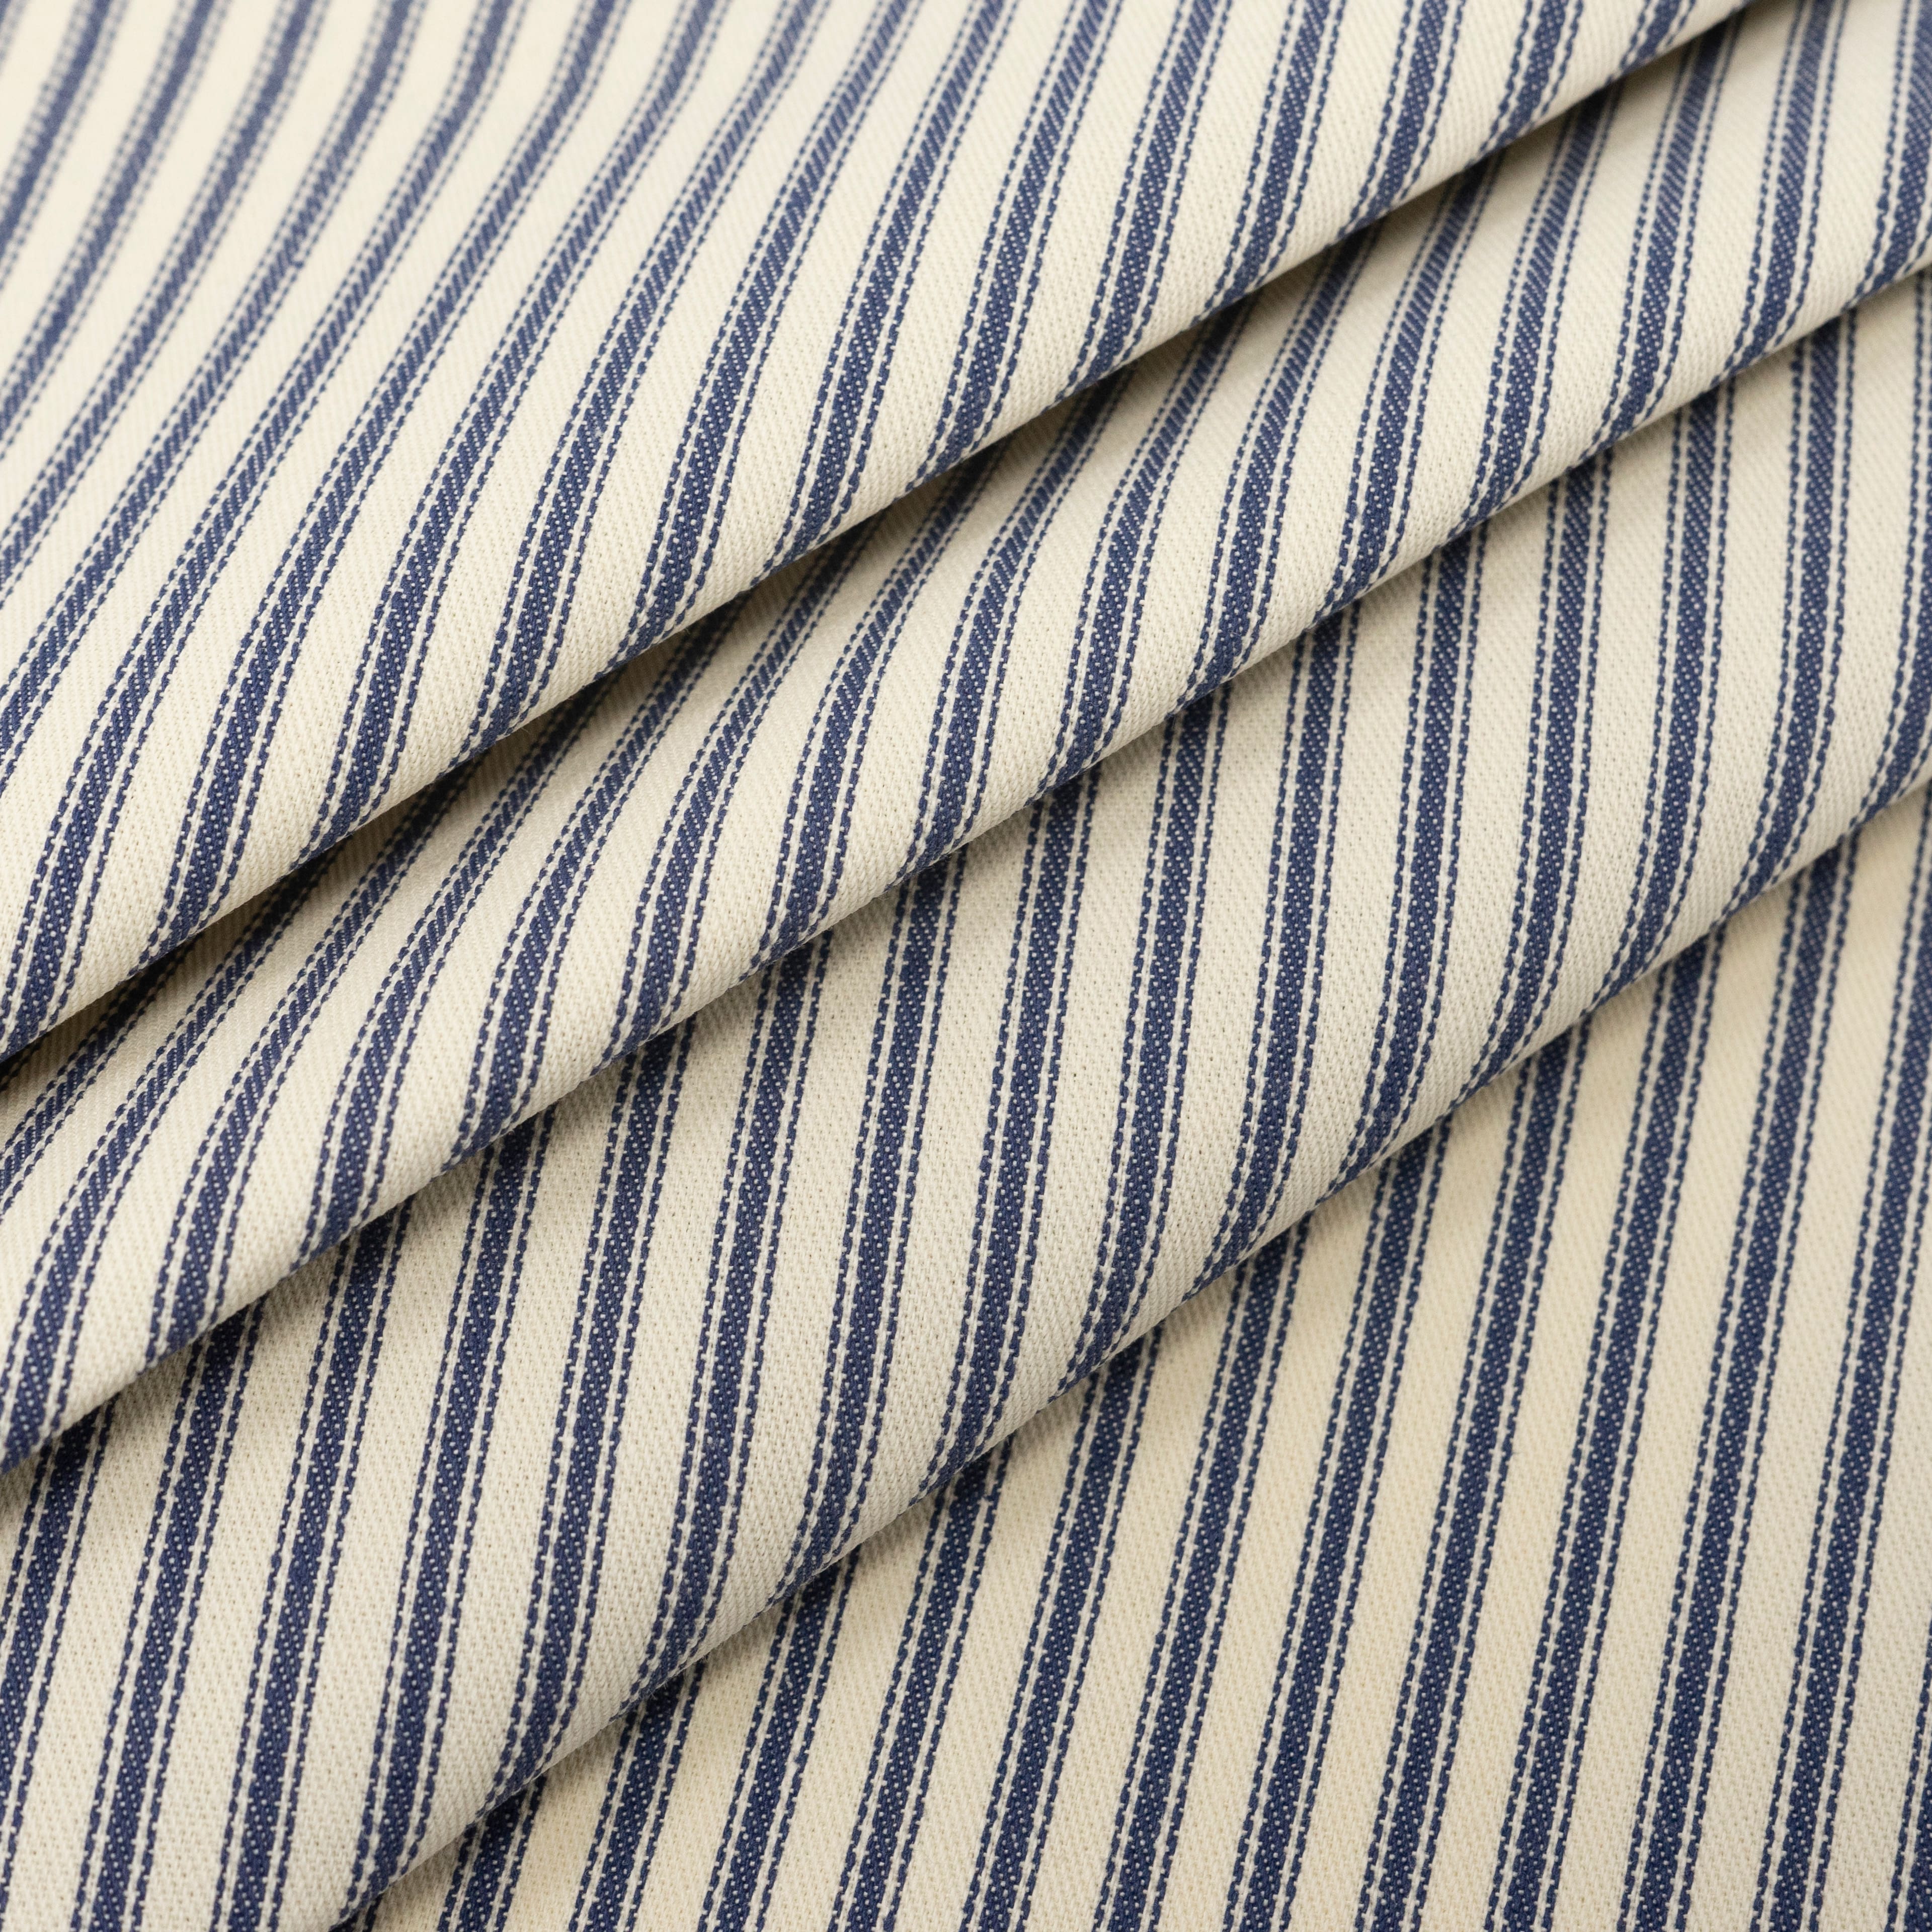 Roc-Lon Woven Ticking Stripe Cotton Fabric